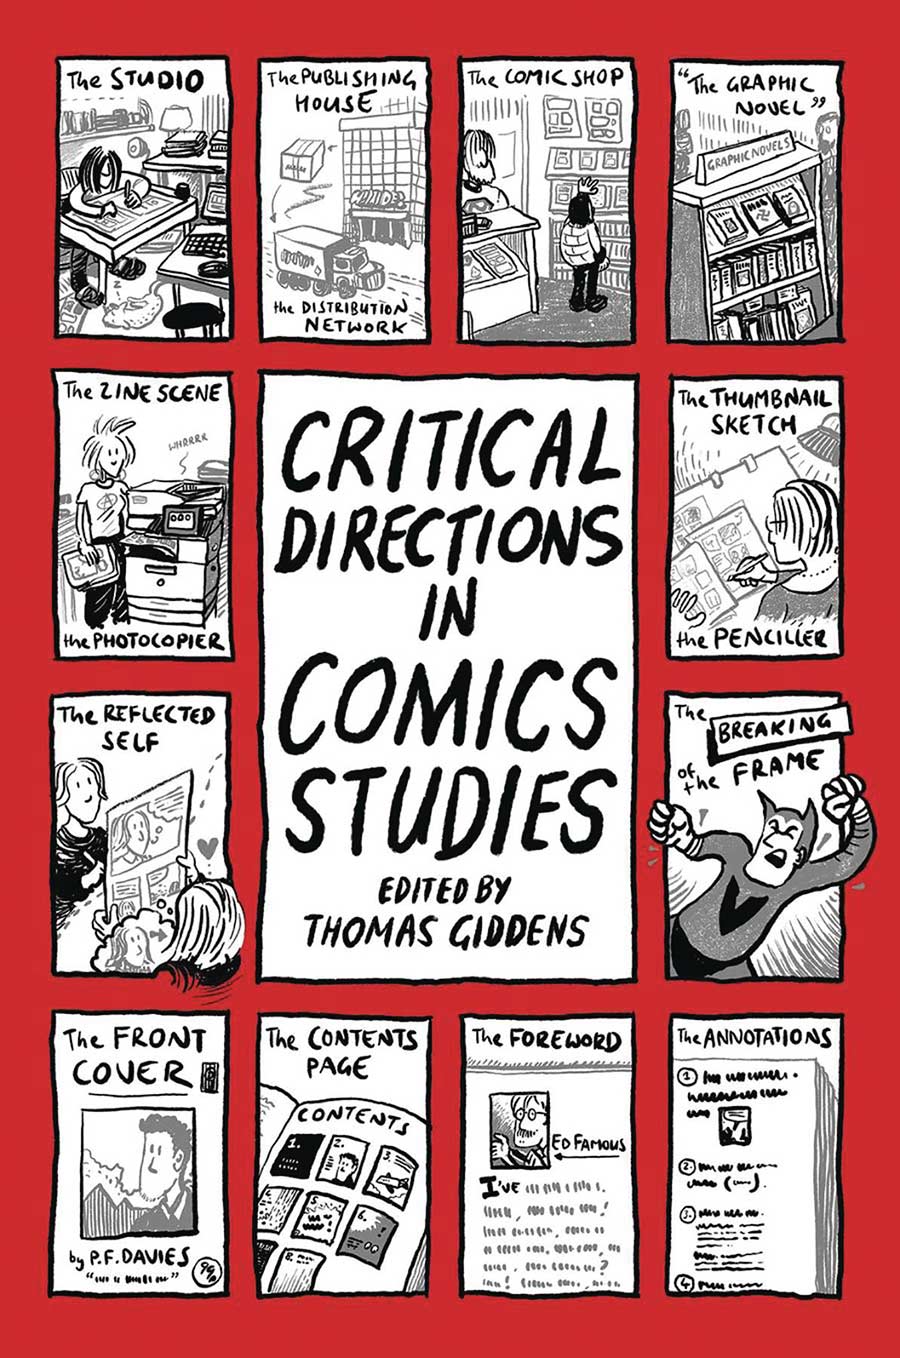 Critical Directions In Comics Studies